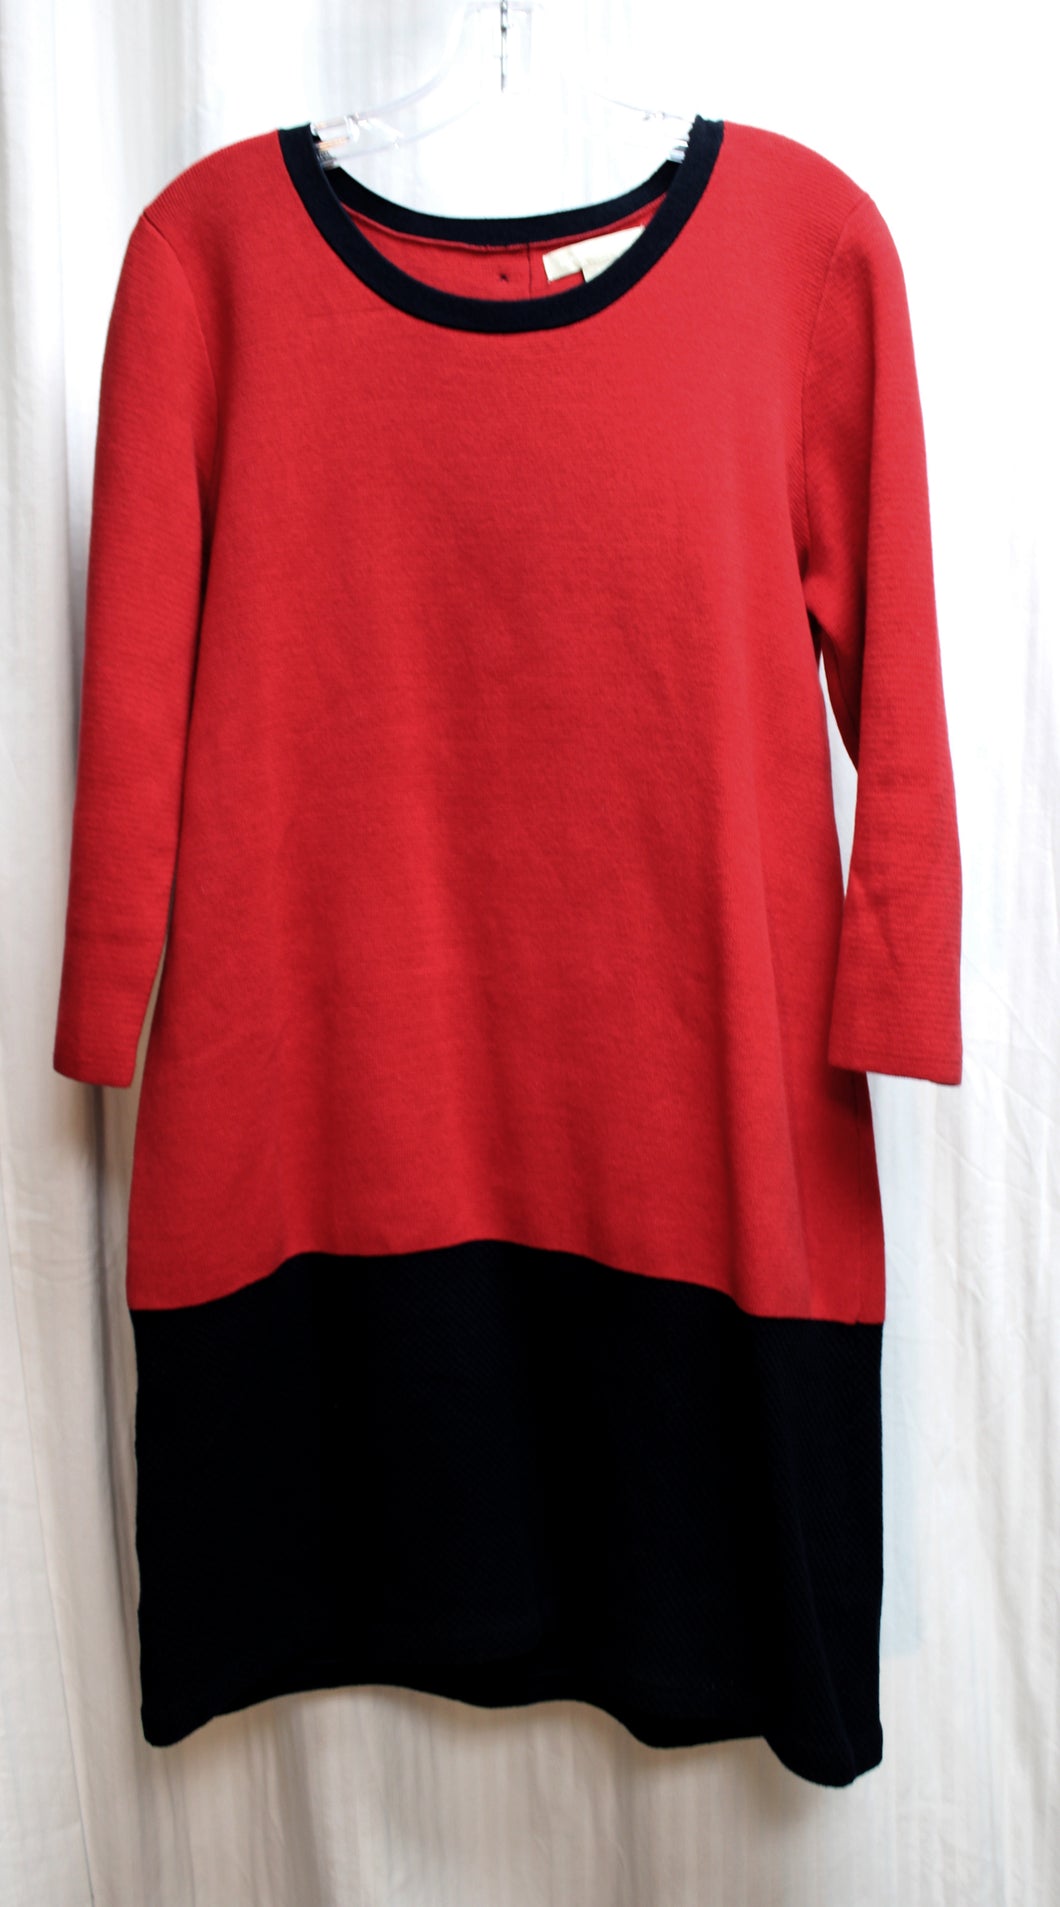 Banana Republic - Red & Soft Black Long Sleeve Knit Sweater Dress w/ Back Button Details - Size L